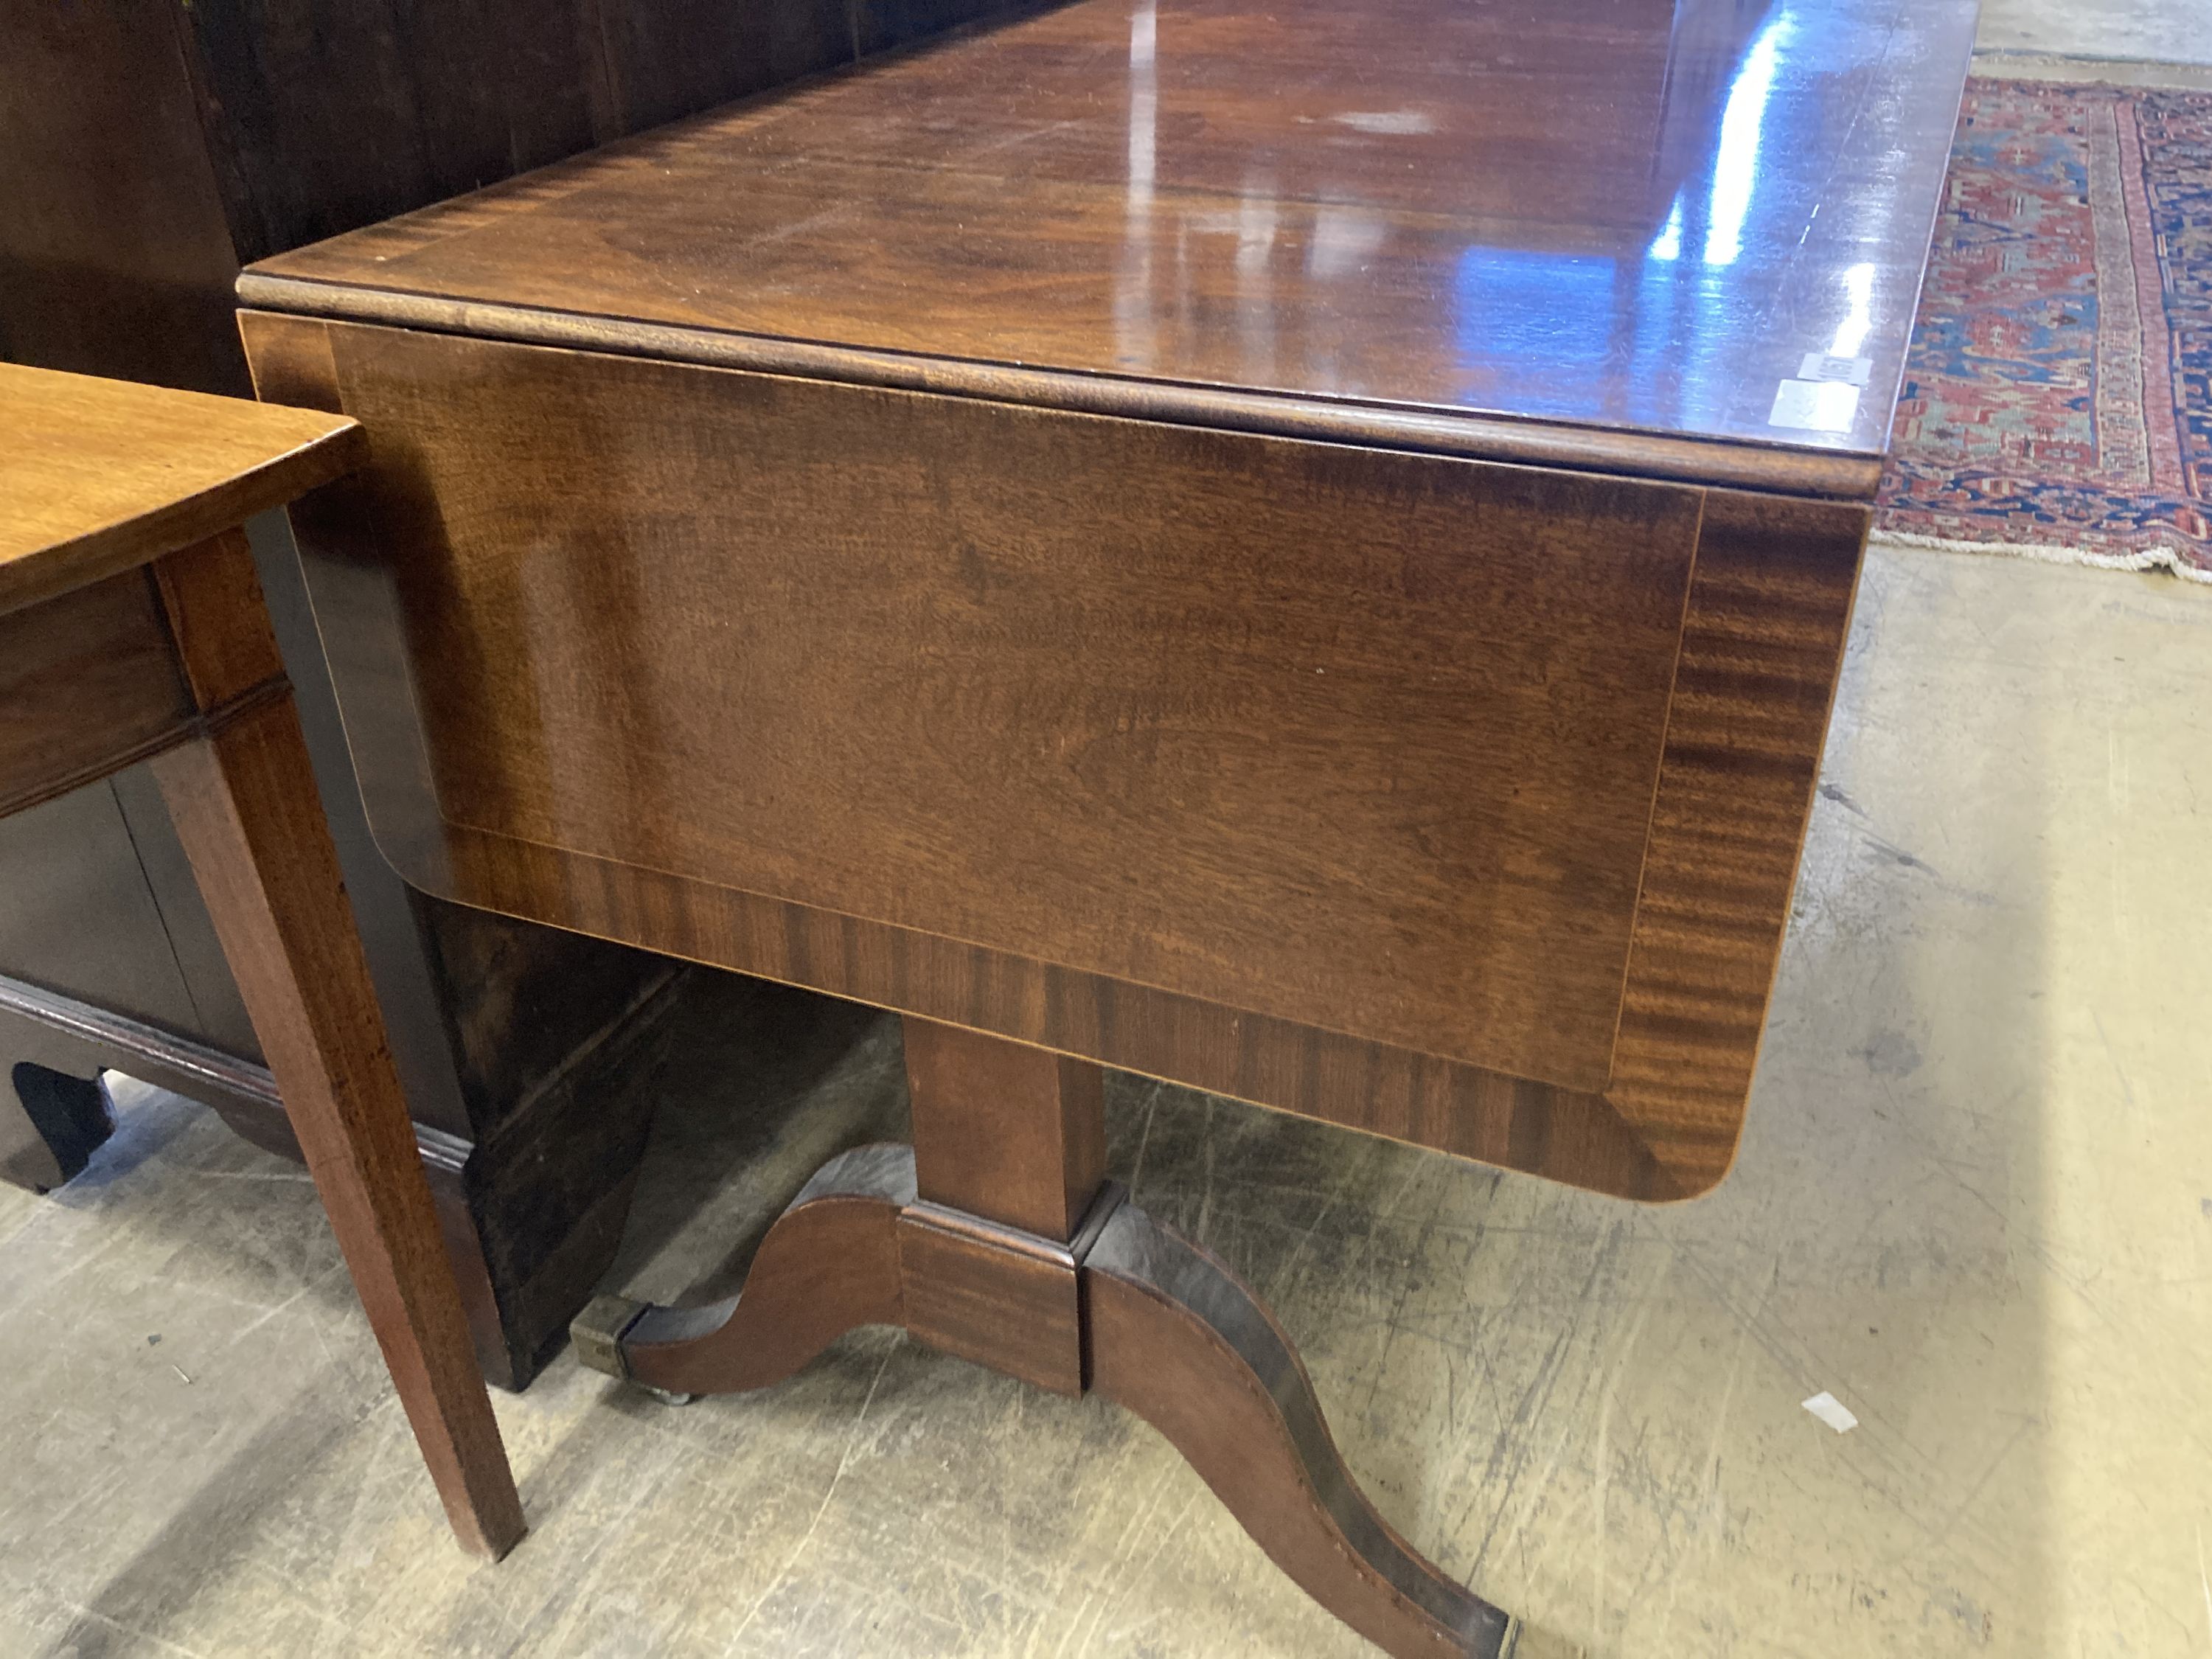 A Regency style mahogany sofa table, width 98cm, depth 67cm, height 76cm